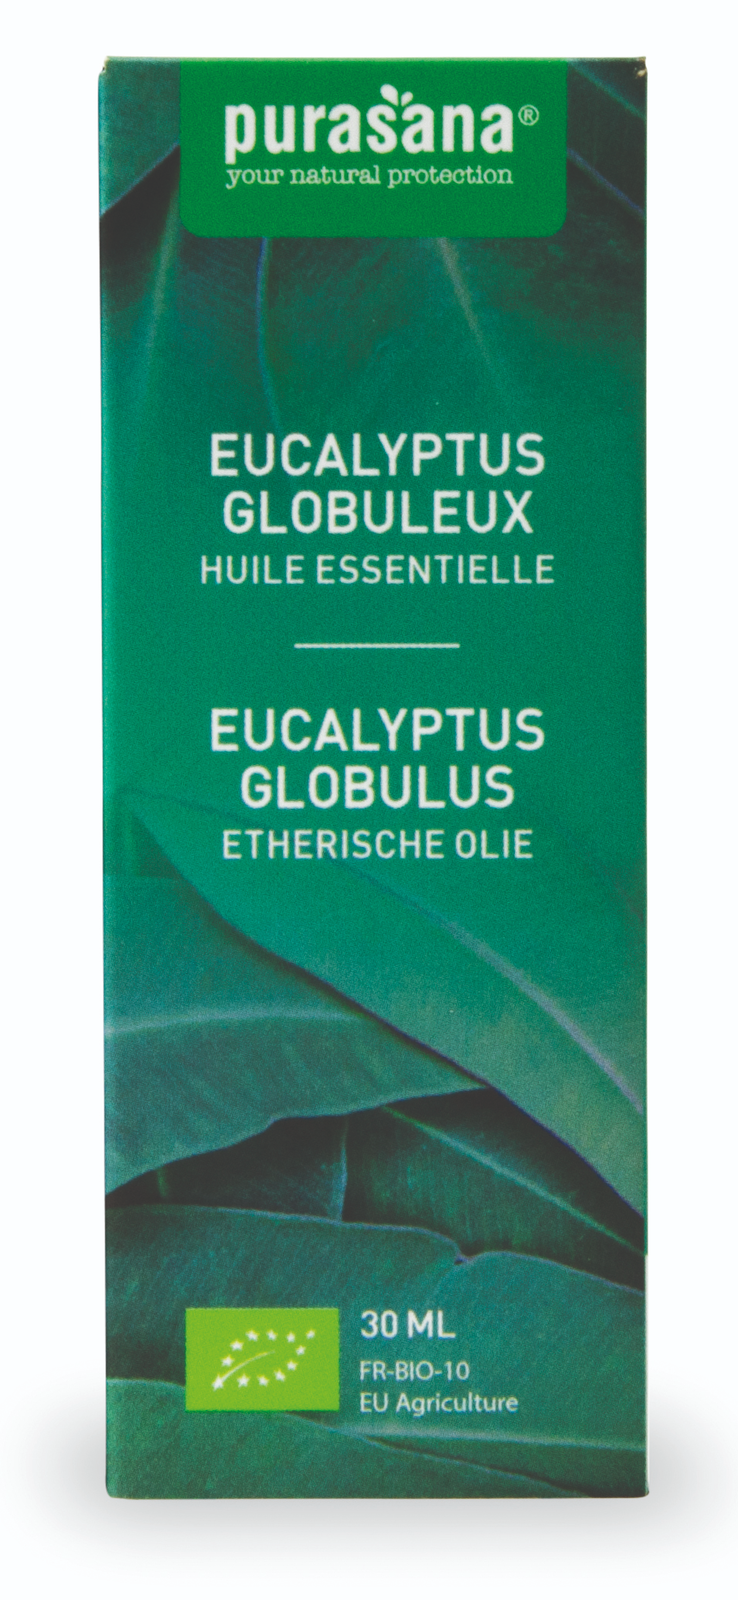 Purasana Etherische Olie Eucalyptus Globulus